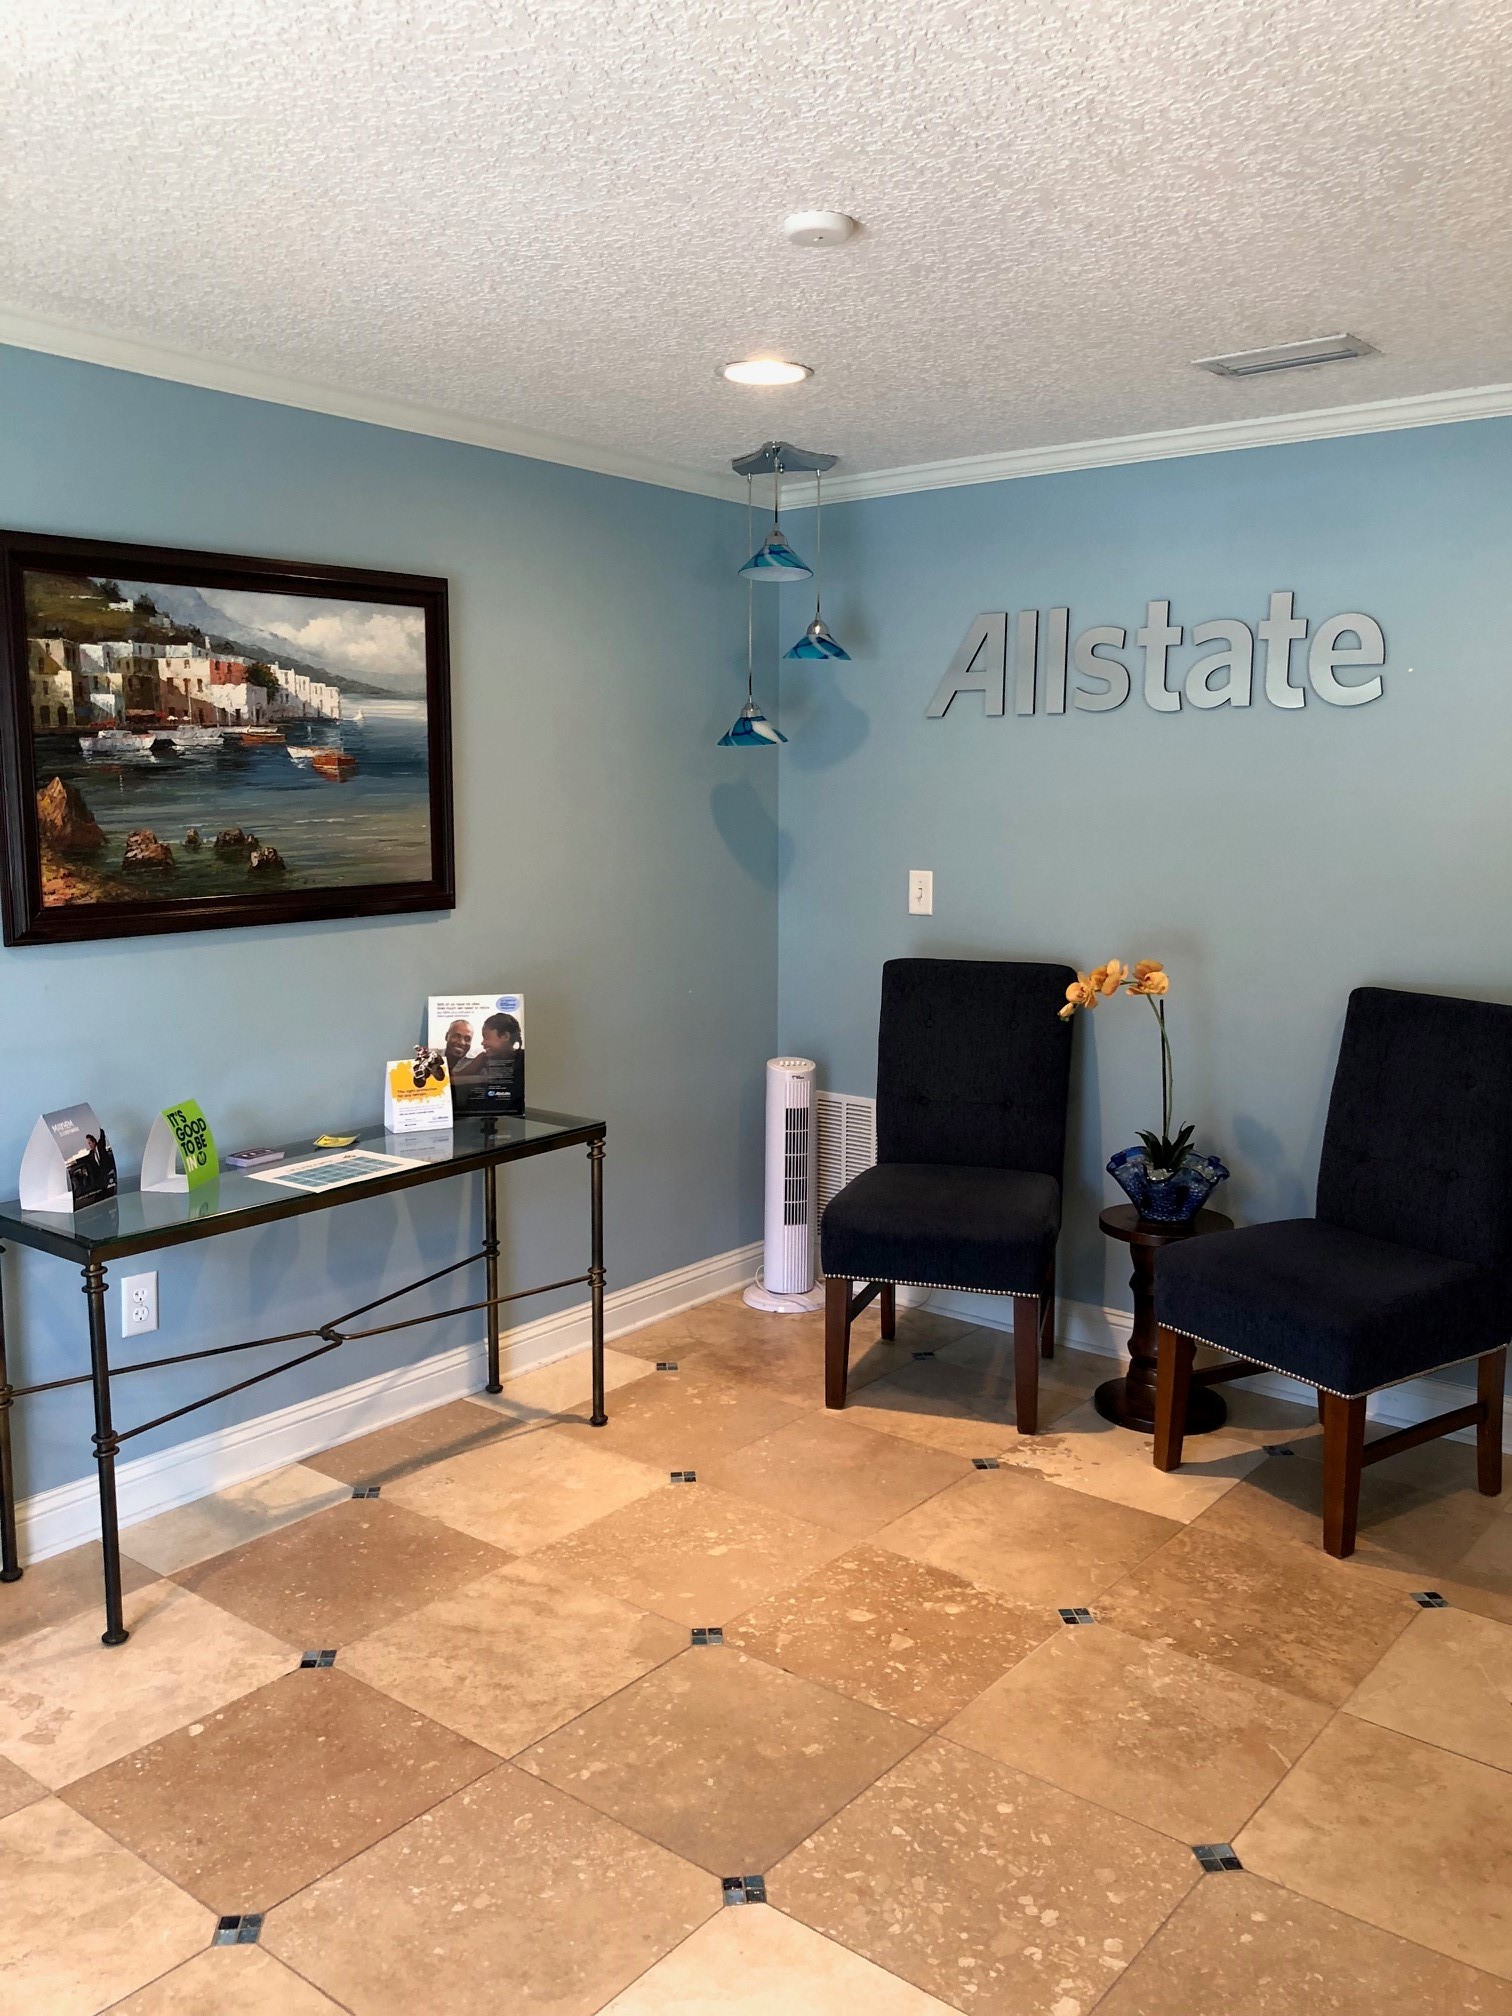 Roderick Crabbe: Allstate Insurance Photo